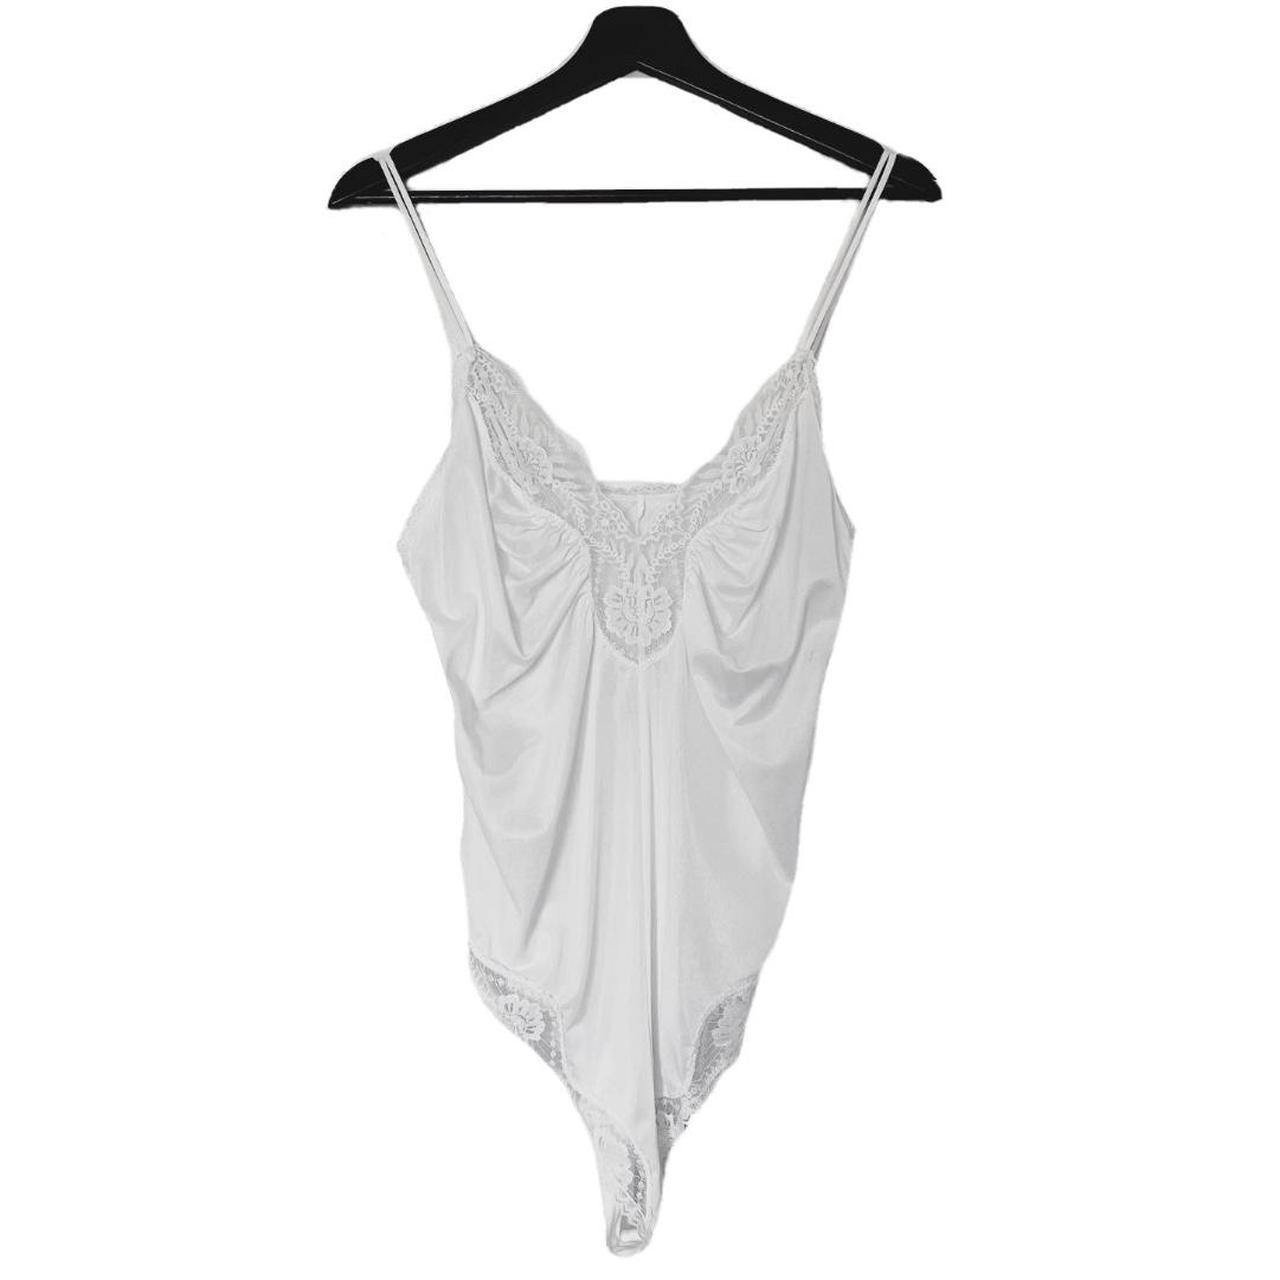 CLEARANCE ️ GORGEOUS Vintage white lingerie... - Depop